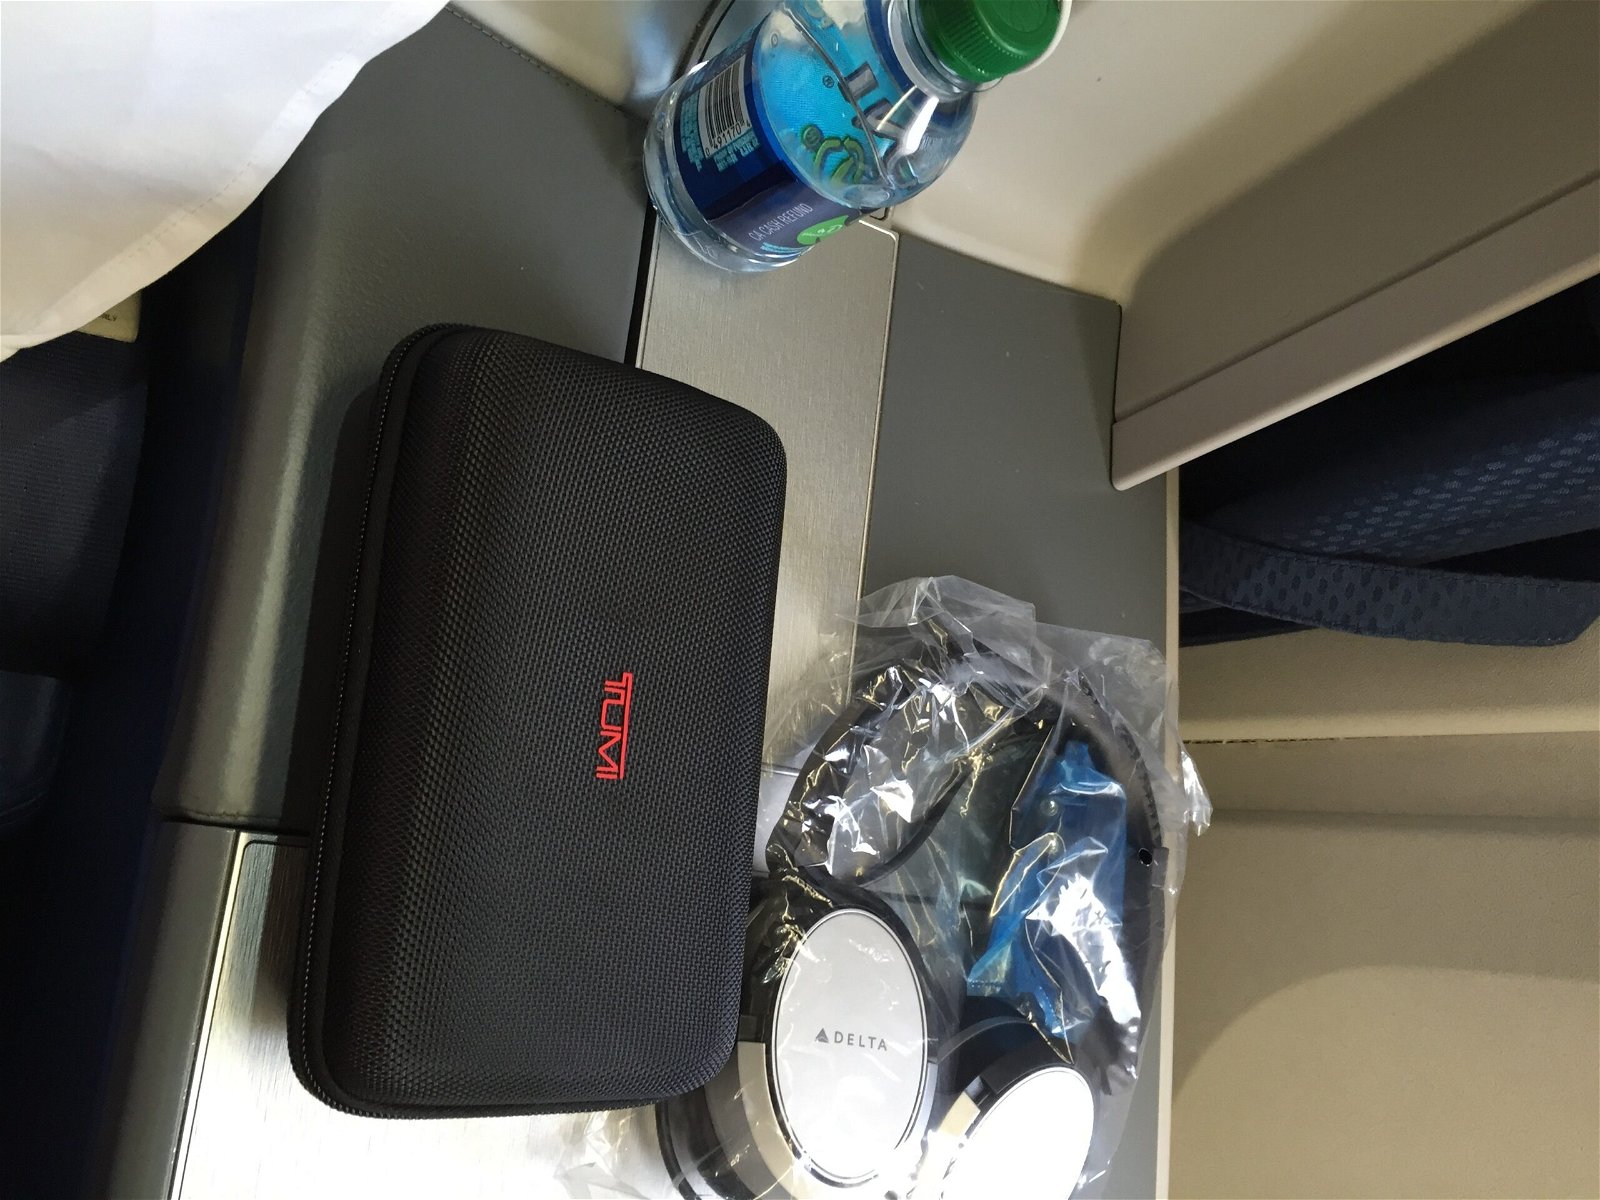 Tumi amenity kit, headphones, and water